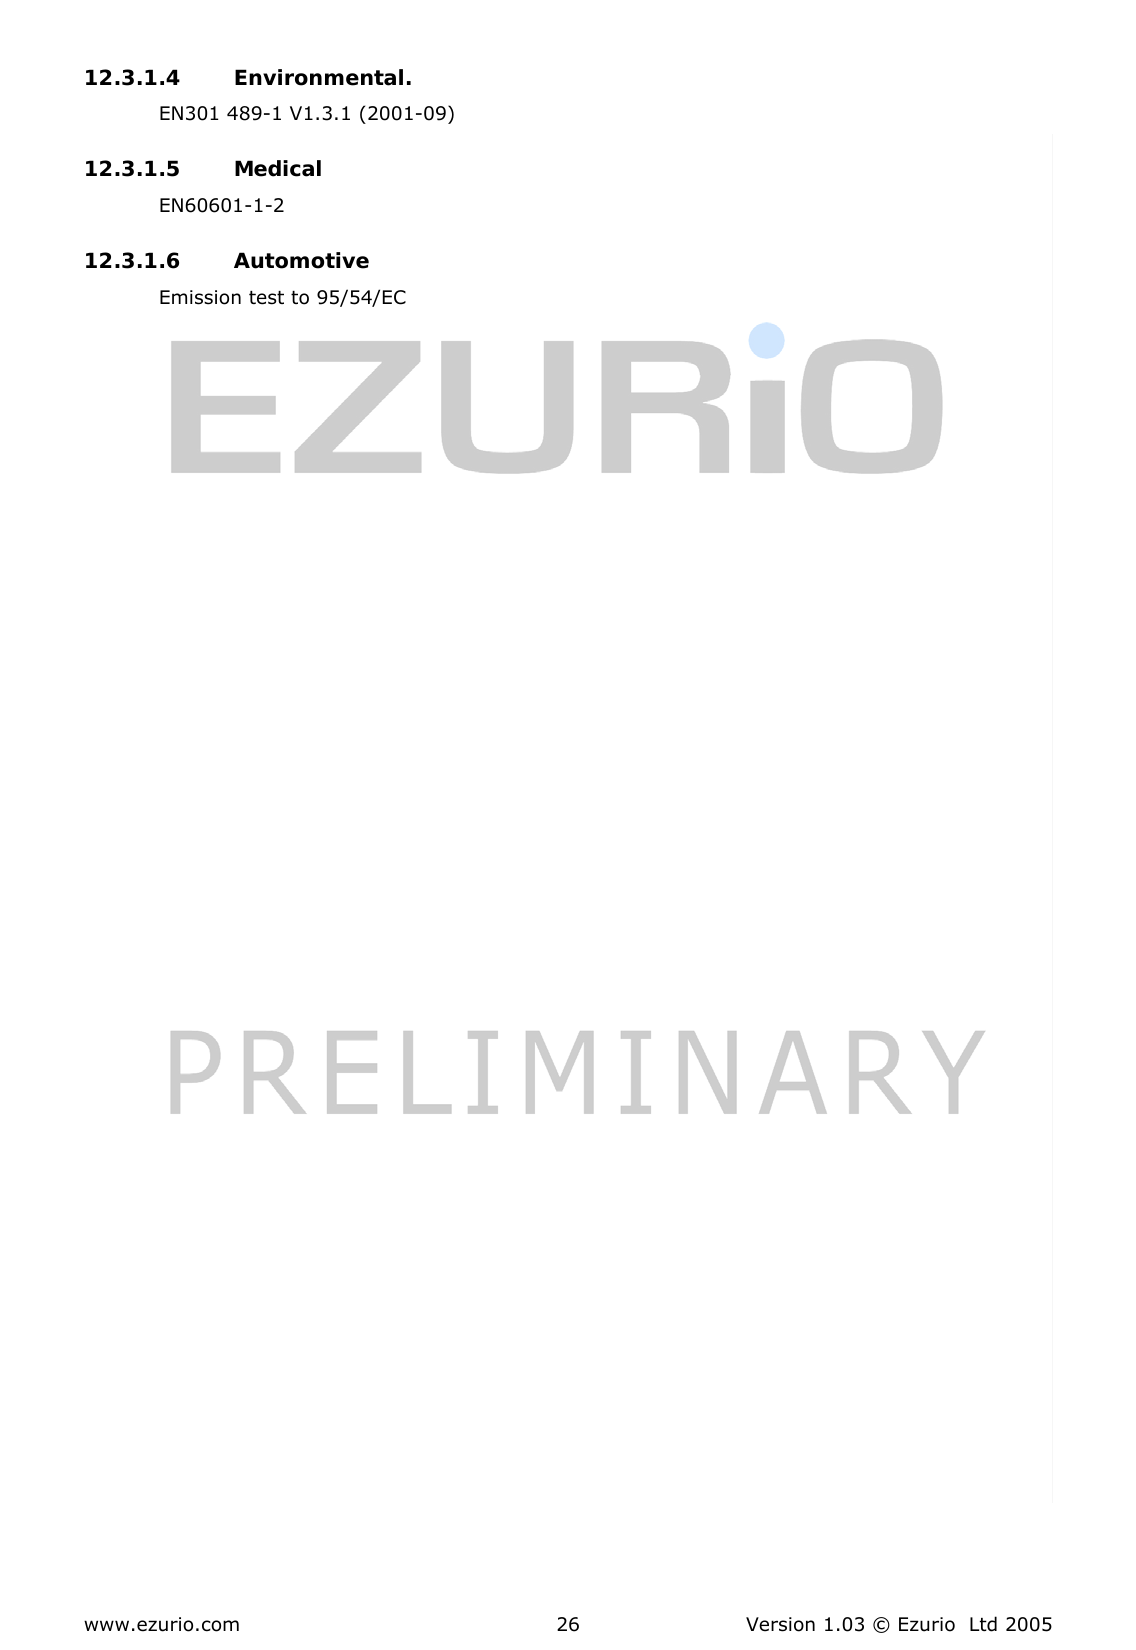  www.ezurio.com  Version 1.03 © Ezurio  Ltd 2005 26 12.3.1.4 Environmental. EN301 489-1 V1.3.1 (2001-09) 12.3.1.5 Medical EN60601-1-2 12.3.1.6 Automotive Emission test to 95/54/EC 